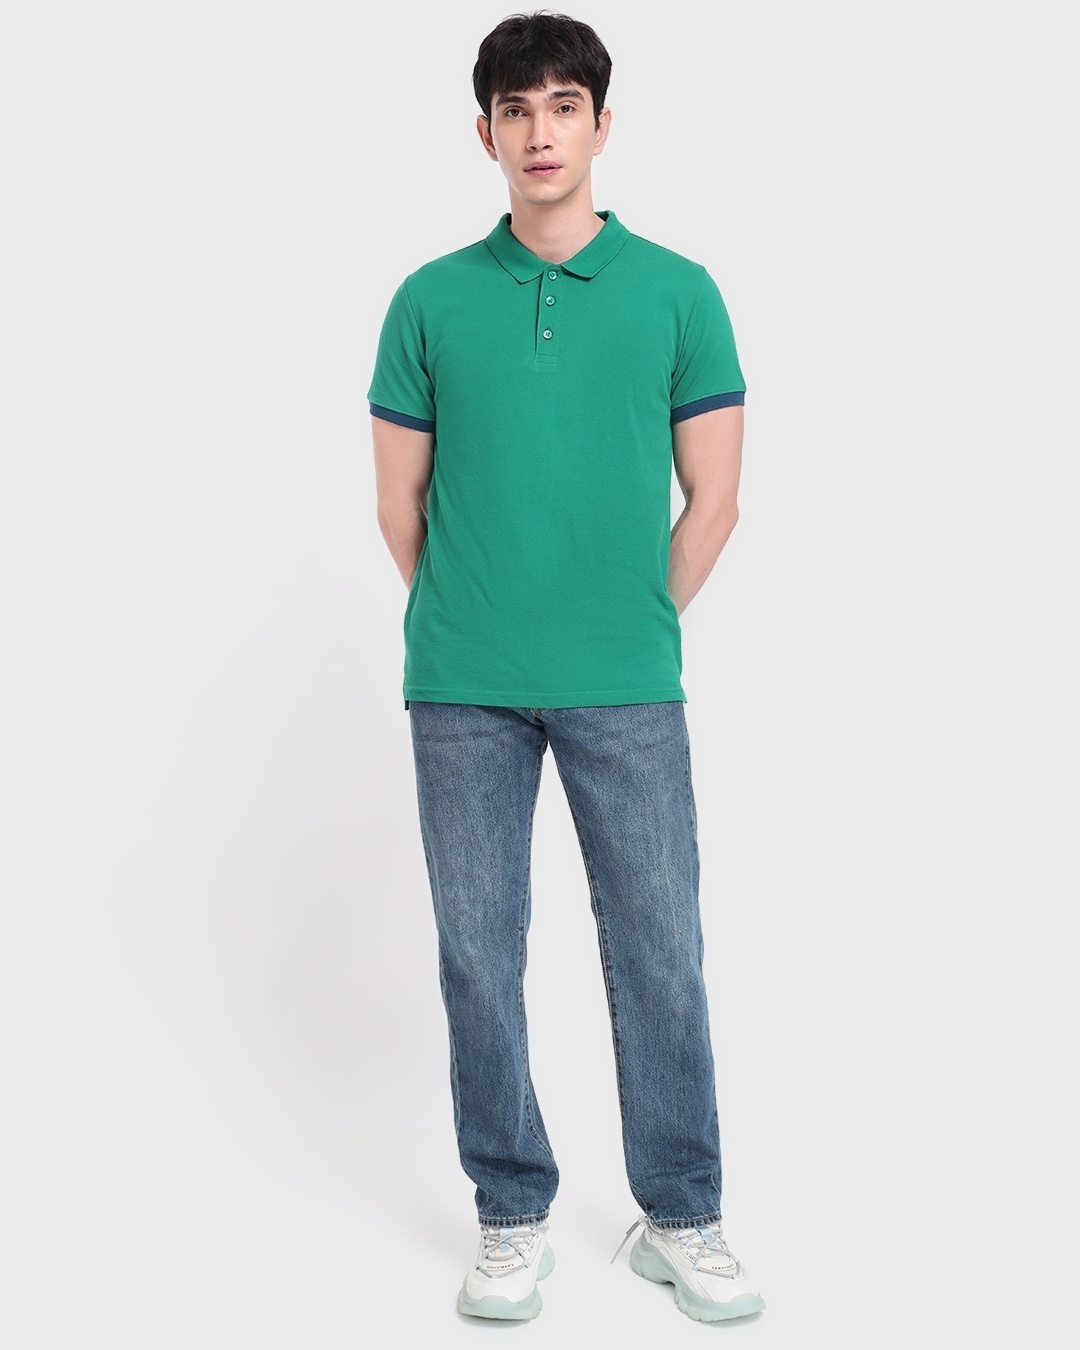 Buy Men's Green Cuffed Sleeve Polo T-shirt for Men Ivy Online at Bewakoof